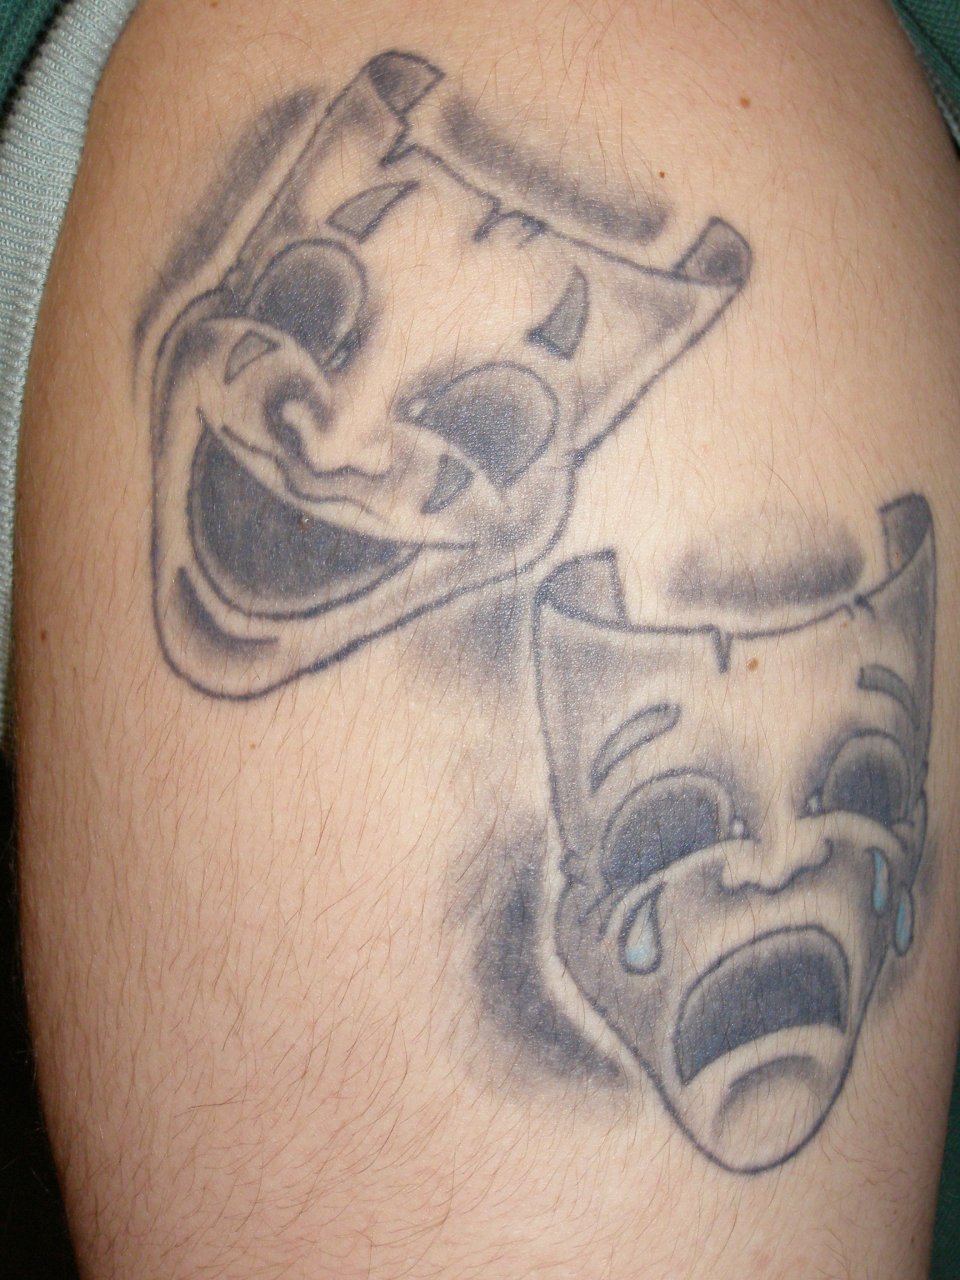 Tattoosday A Tattoo Blog Tattoos I Know Comedy and Tragedy